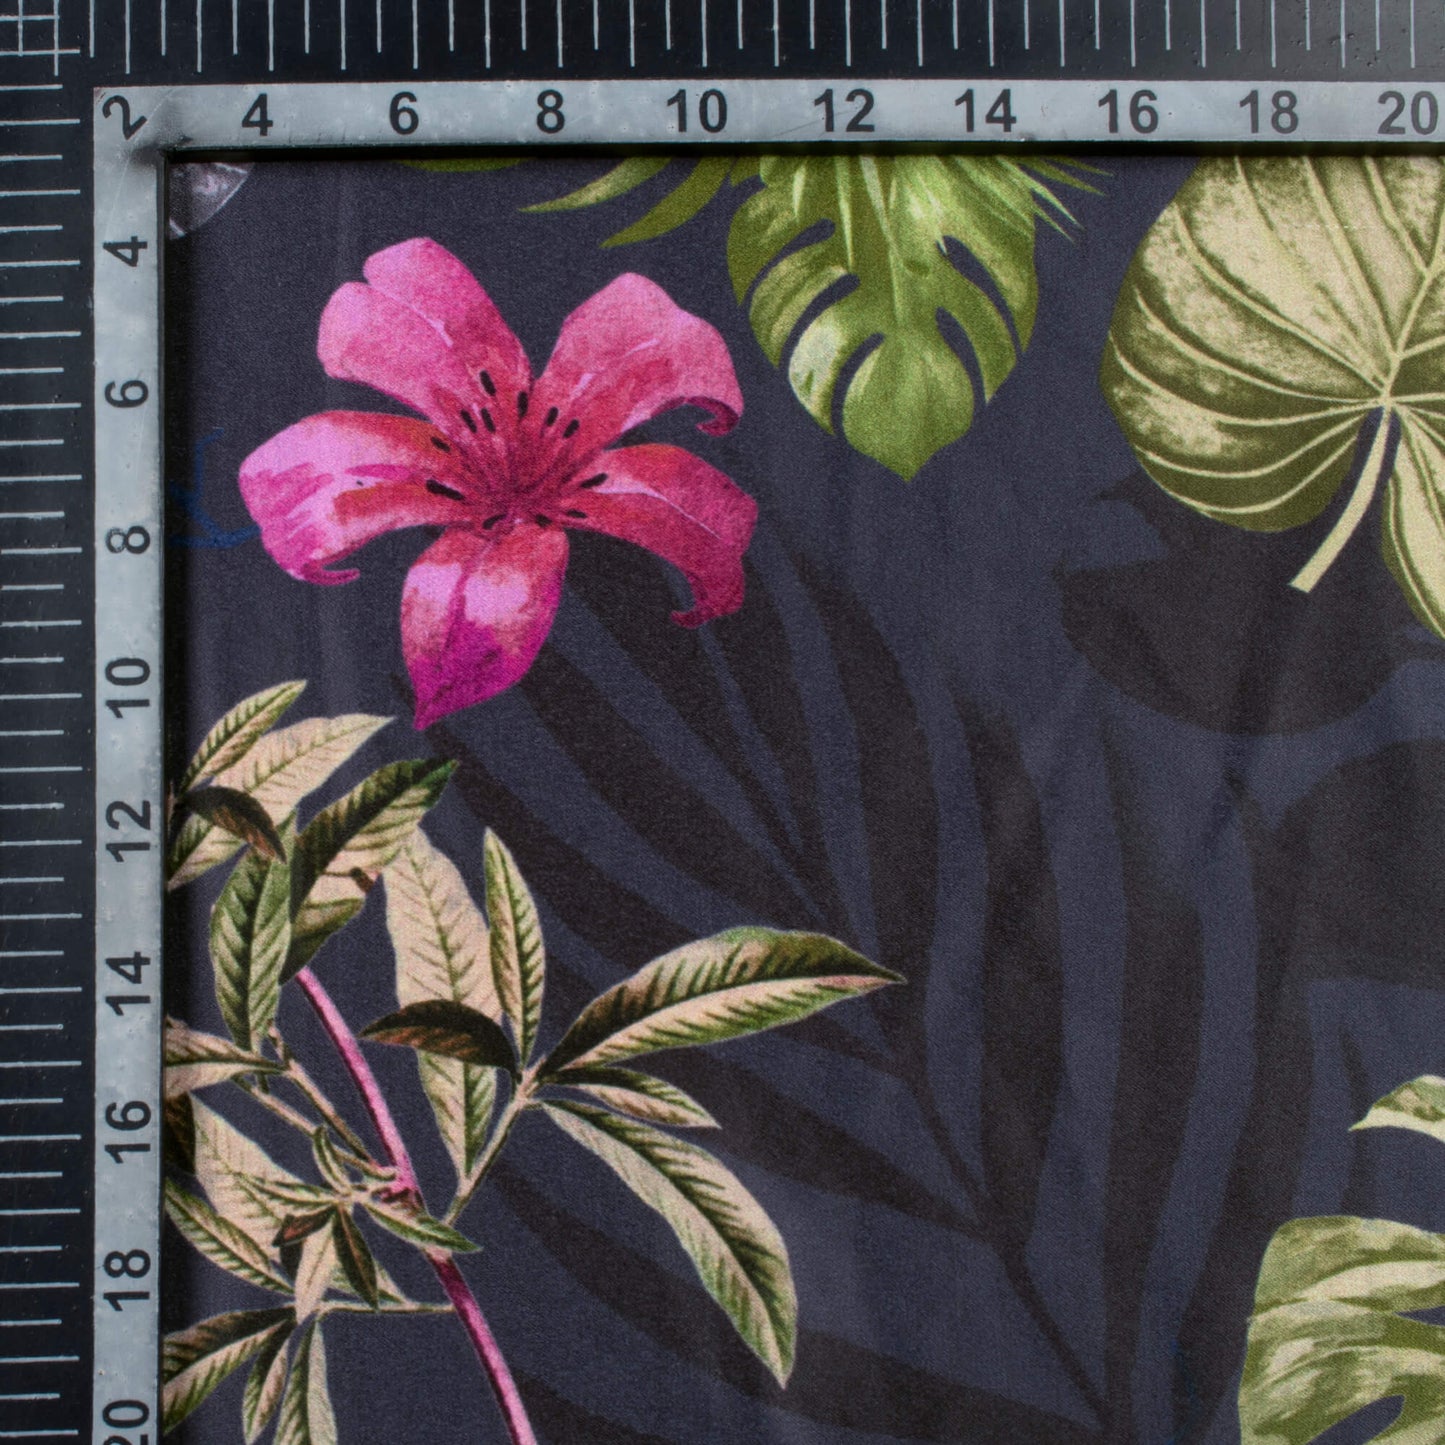 Prussian Blue And Fern Green Floral Pattern Digital Print Lush Satin Fabric